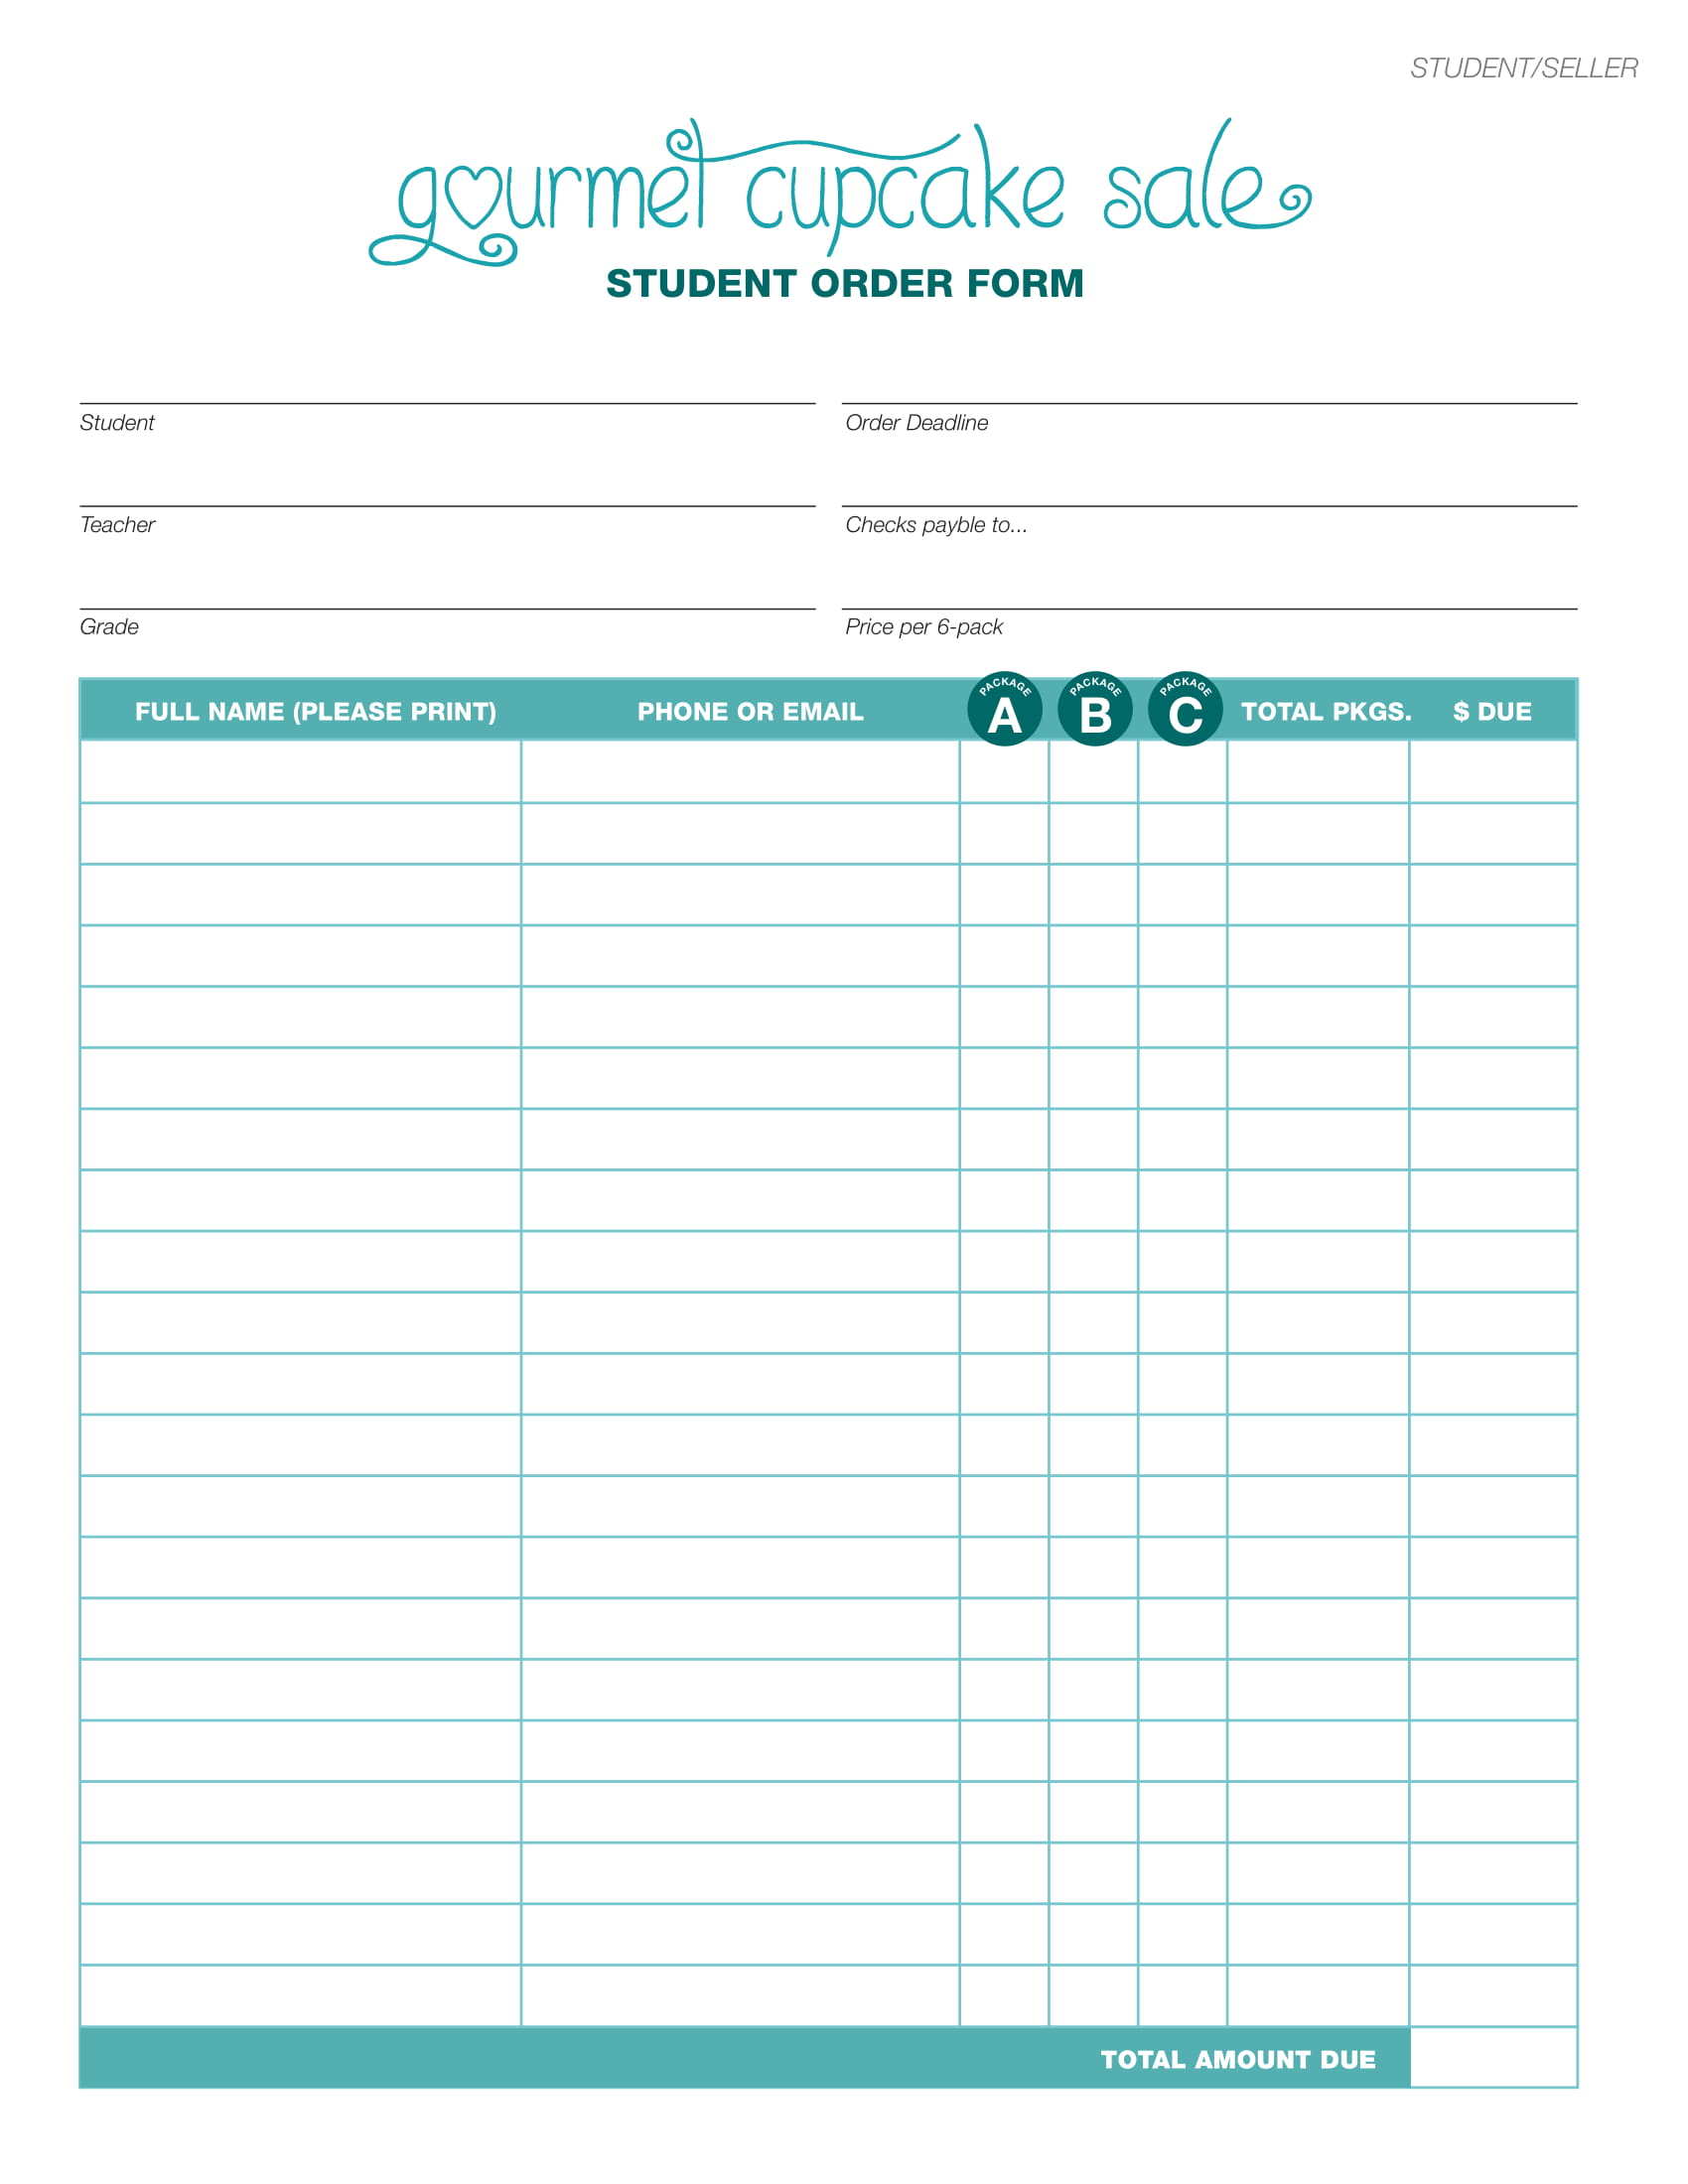 cupcake student order form 2